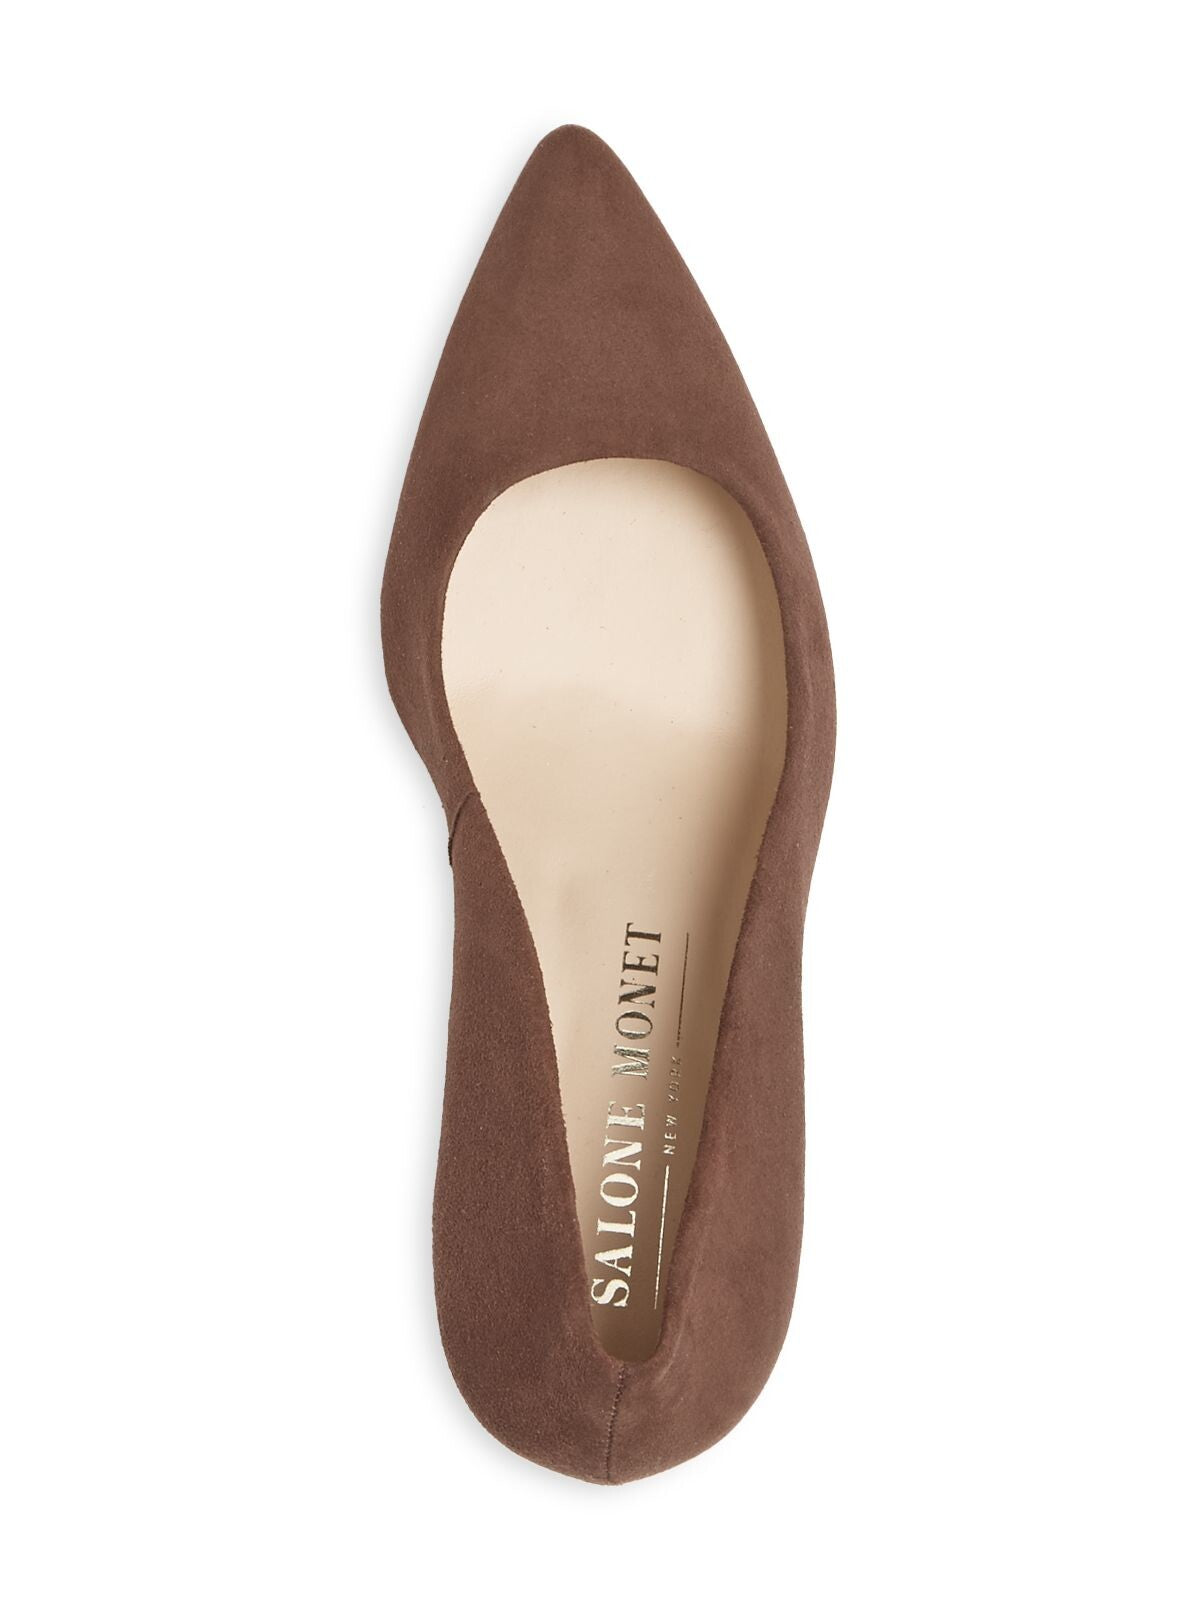 SALONE MONET Womens Beige Recessed 1/2" Platform Comfort Anita Almond Toe Stiletto Slip On Leather Dress Pumps Shoes